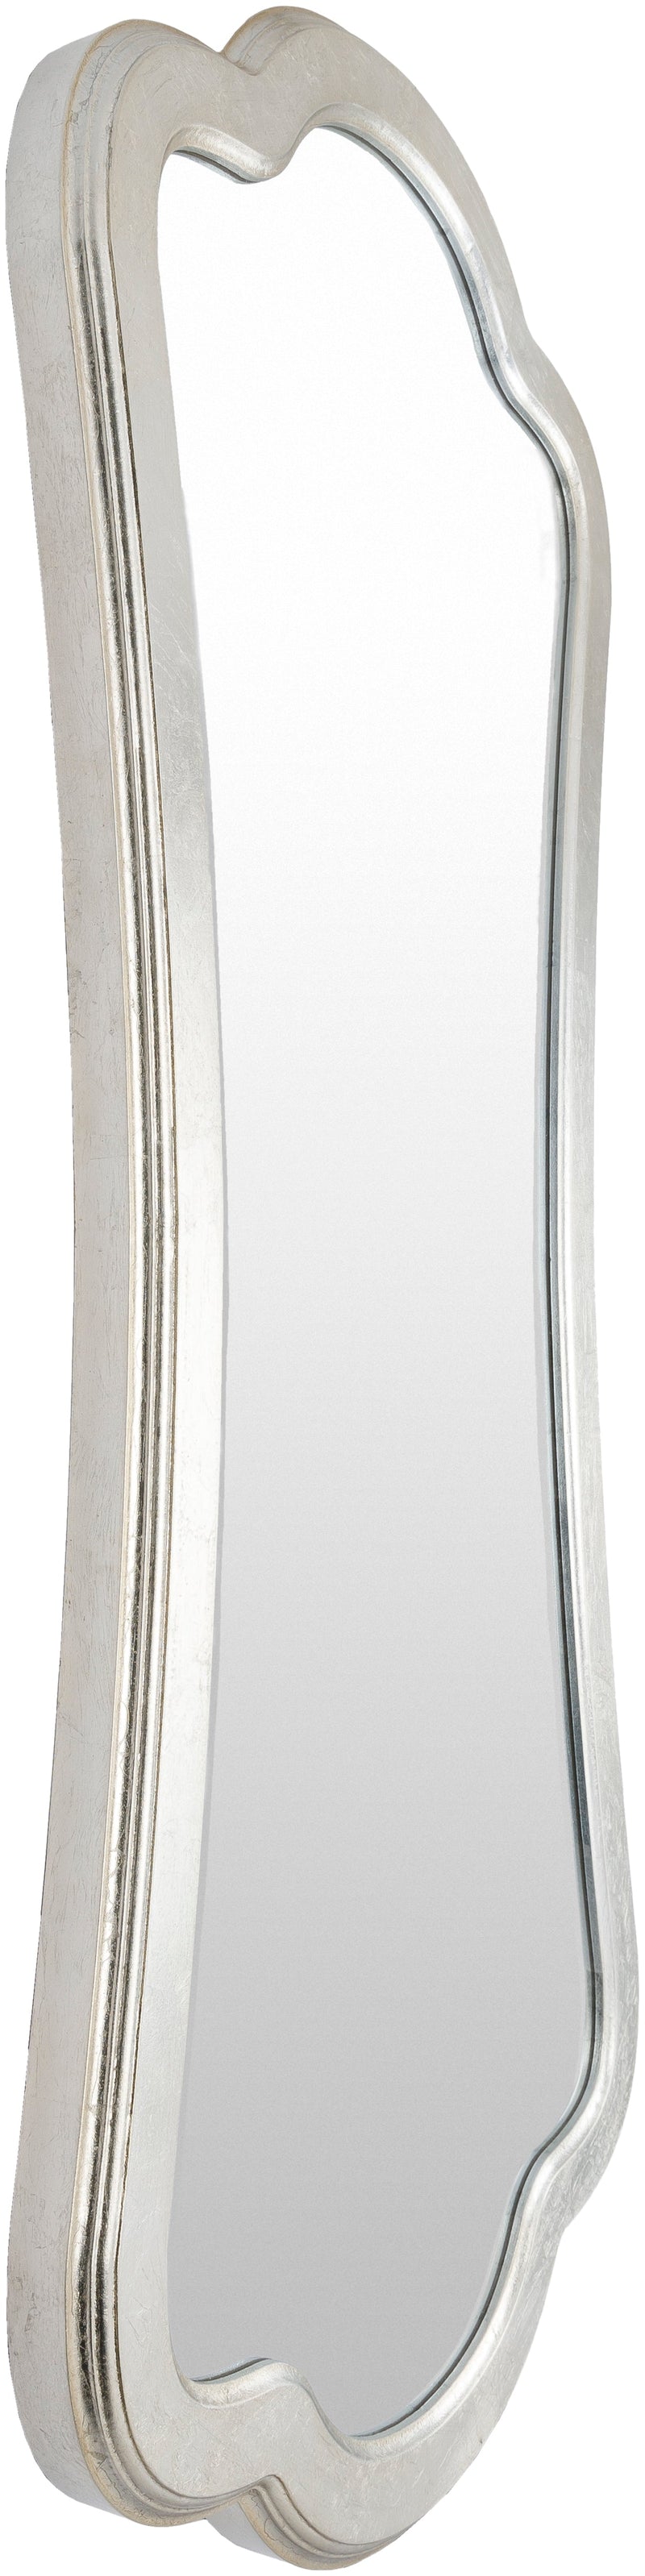 Vouvant Silver Mirror